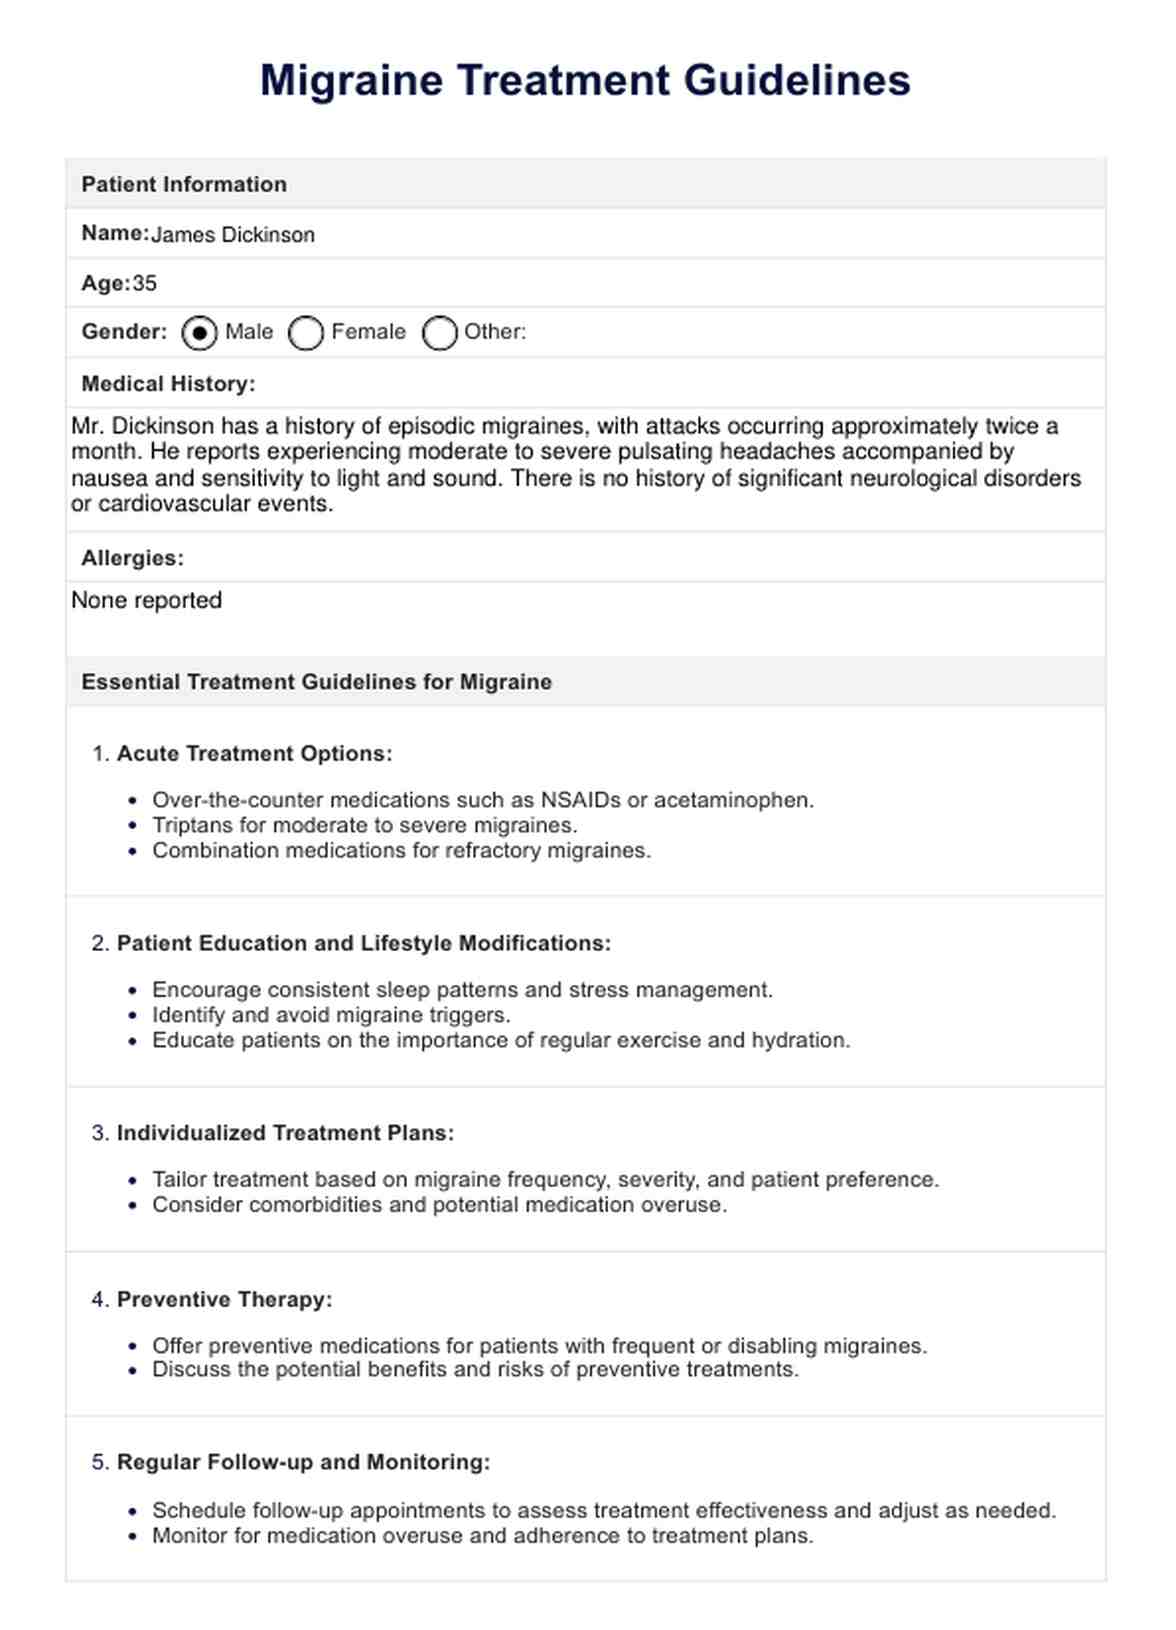 Migraine Treatment Guidelines PDF Example